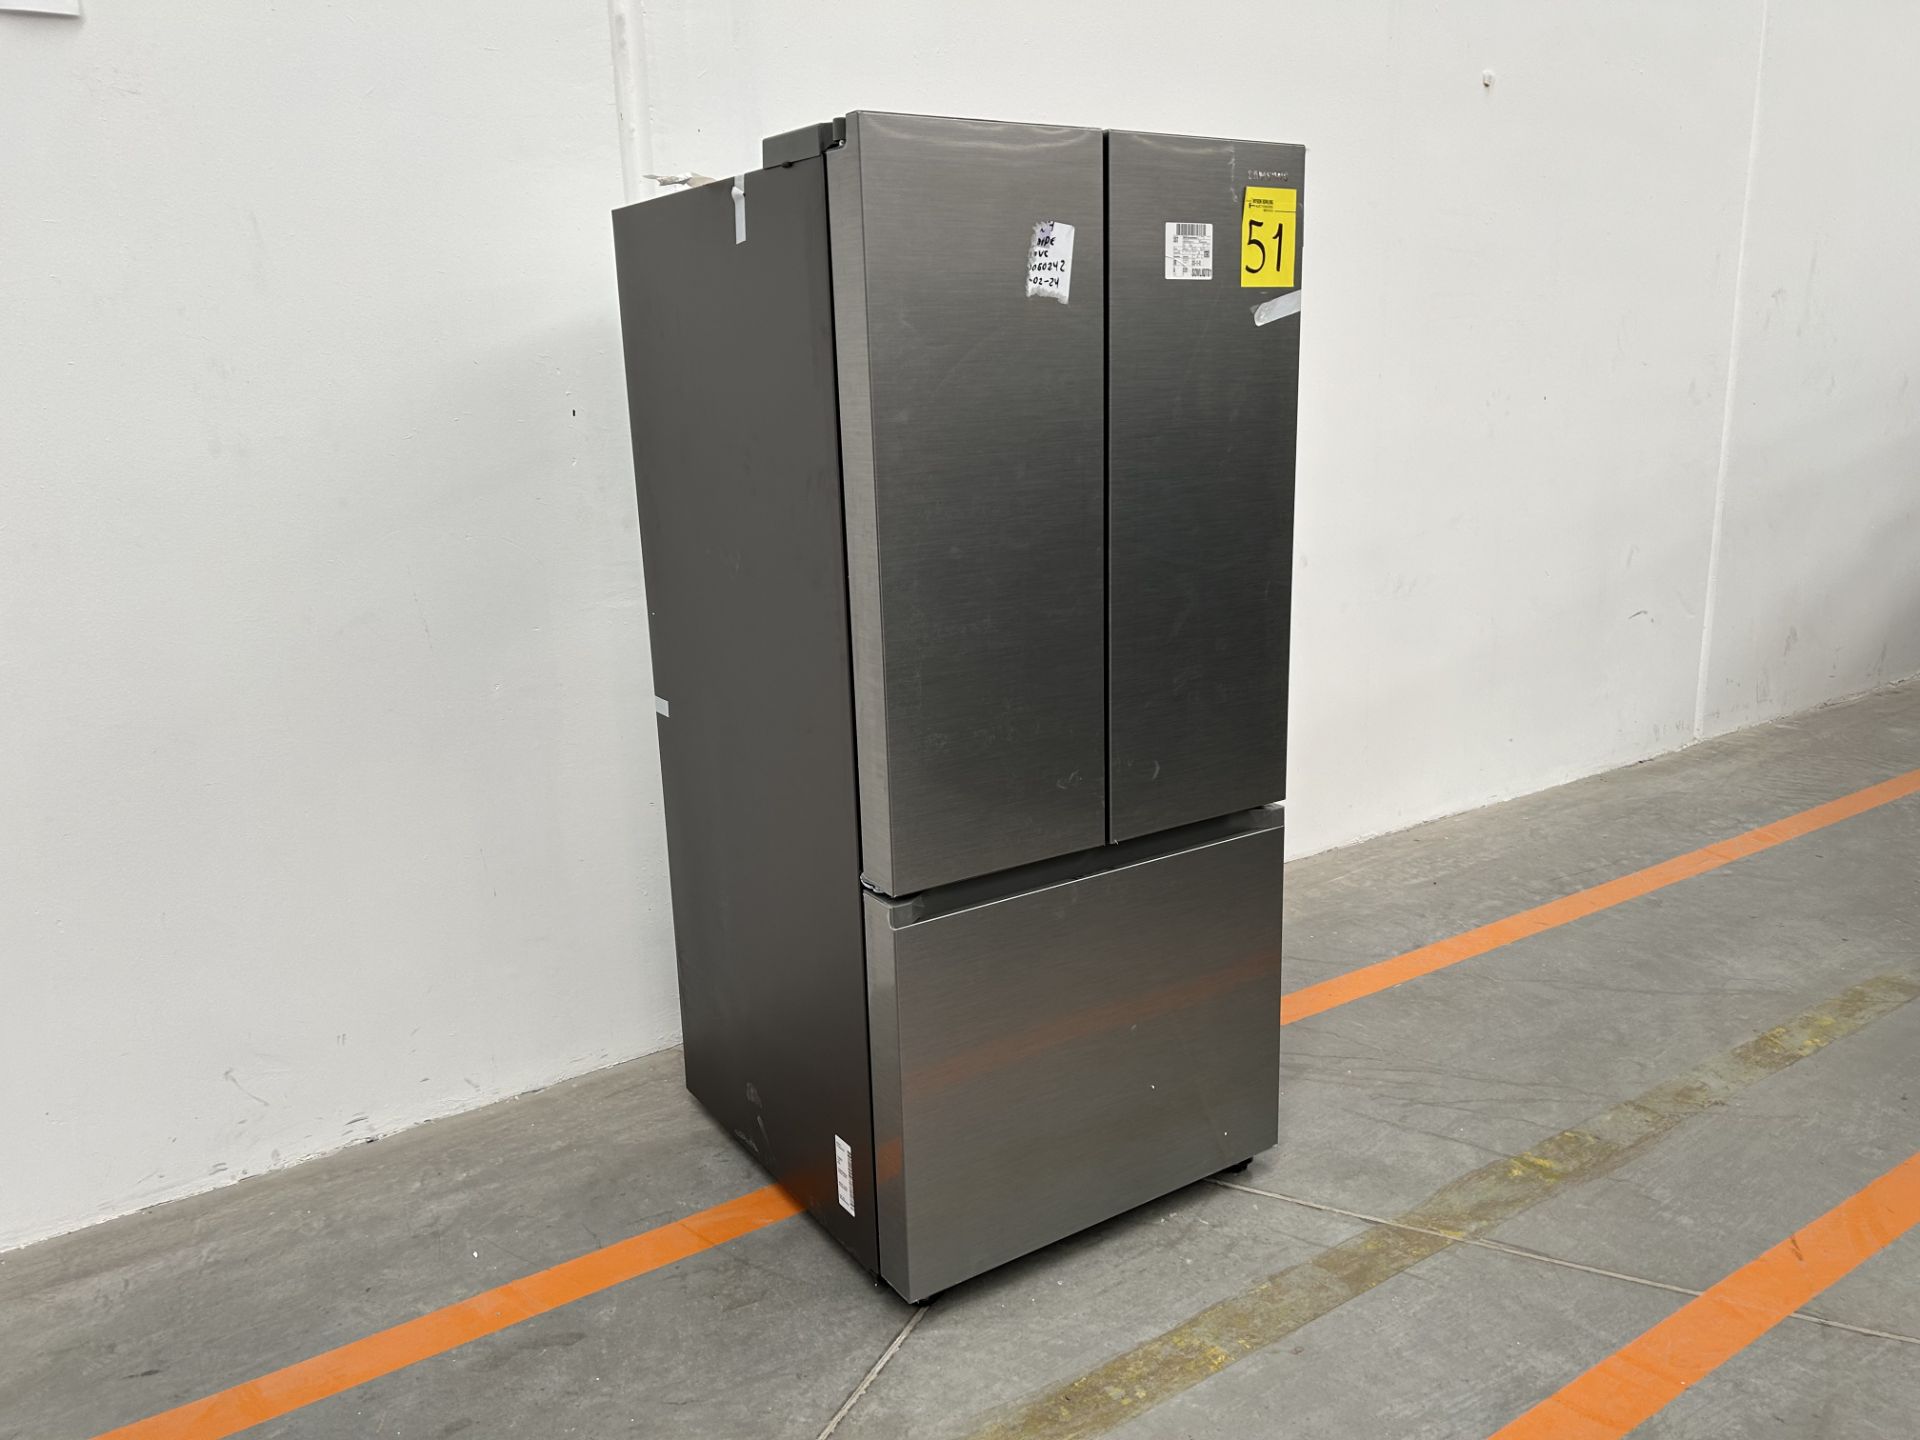 (NUEVO) Refrigerador Marca SAMSUNG, Modelo RF22A410S9, Serie 0016K, Color GRIS - Image 3 of 4